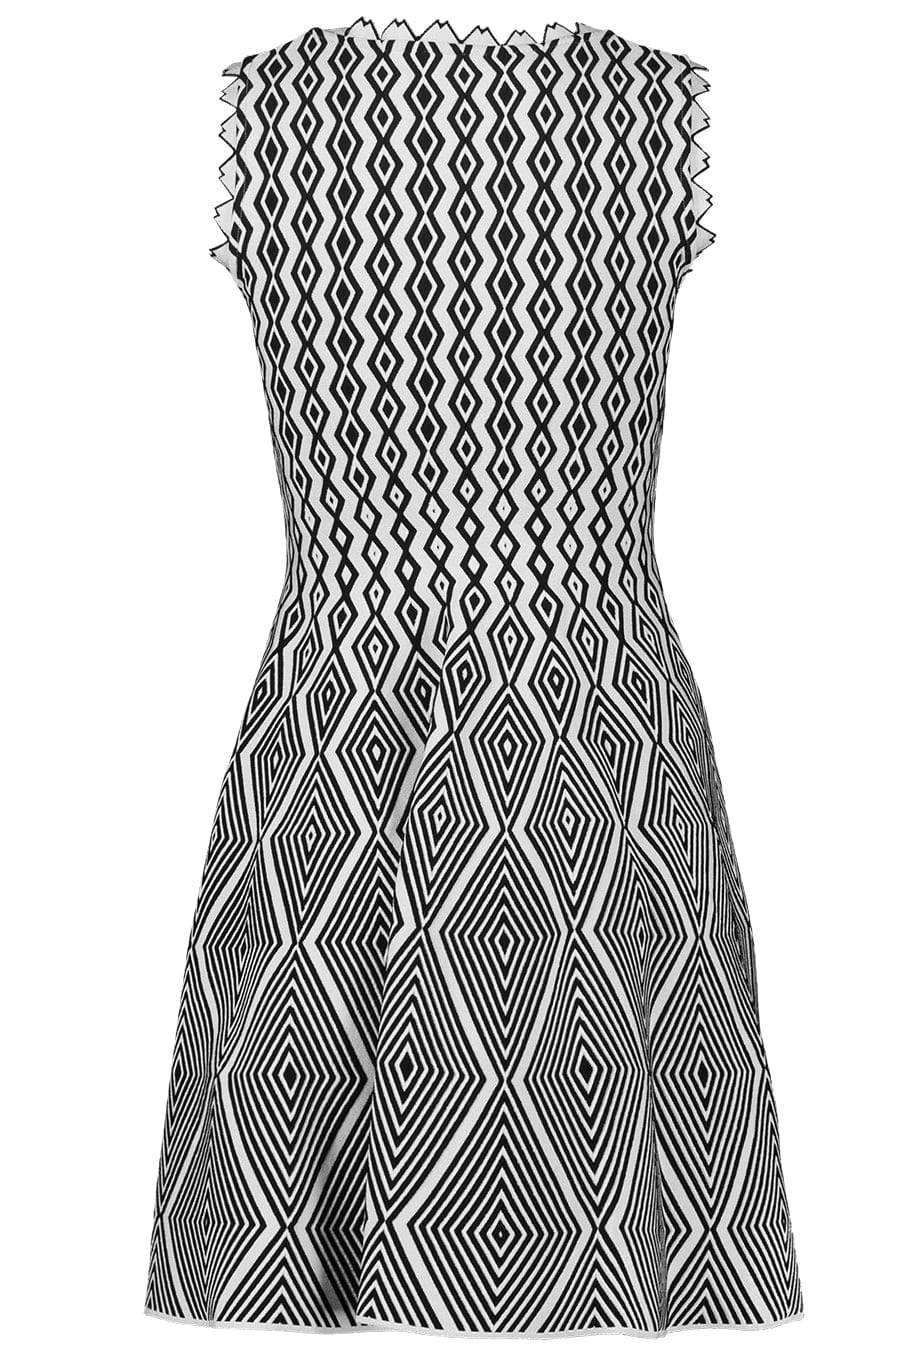 Armonia Mini Dress CLOTHINGDRESSCASUAL ANTONINO VALENTI   